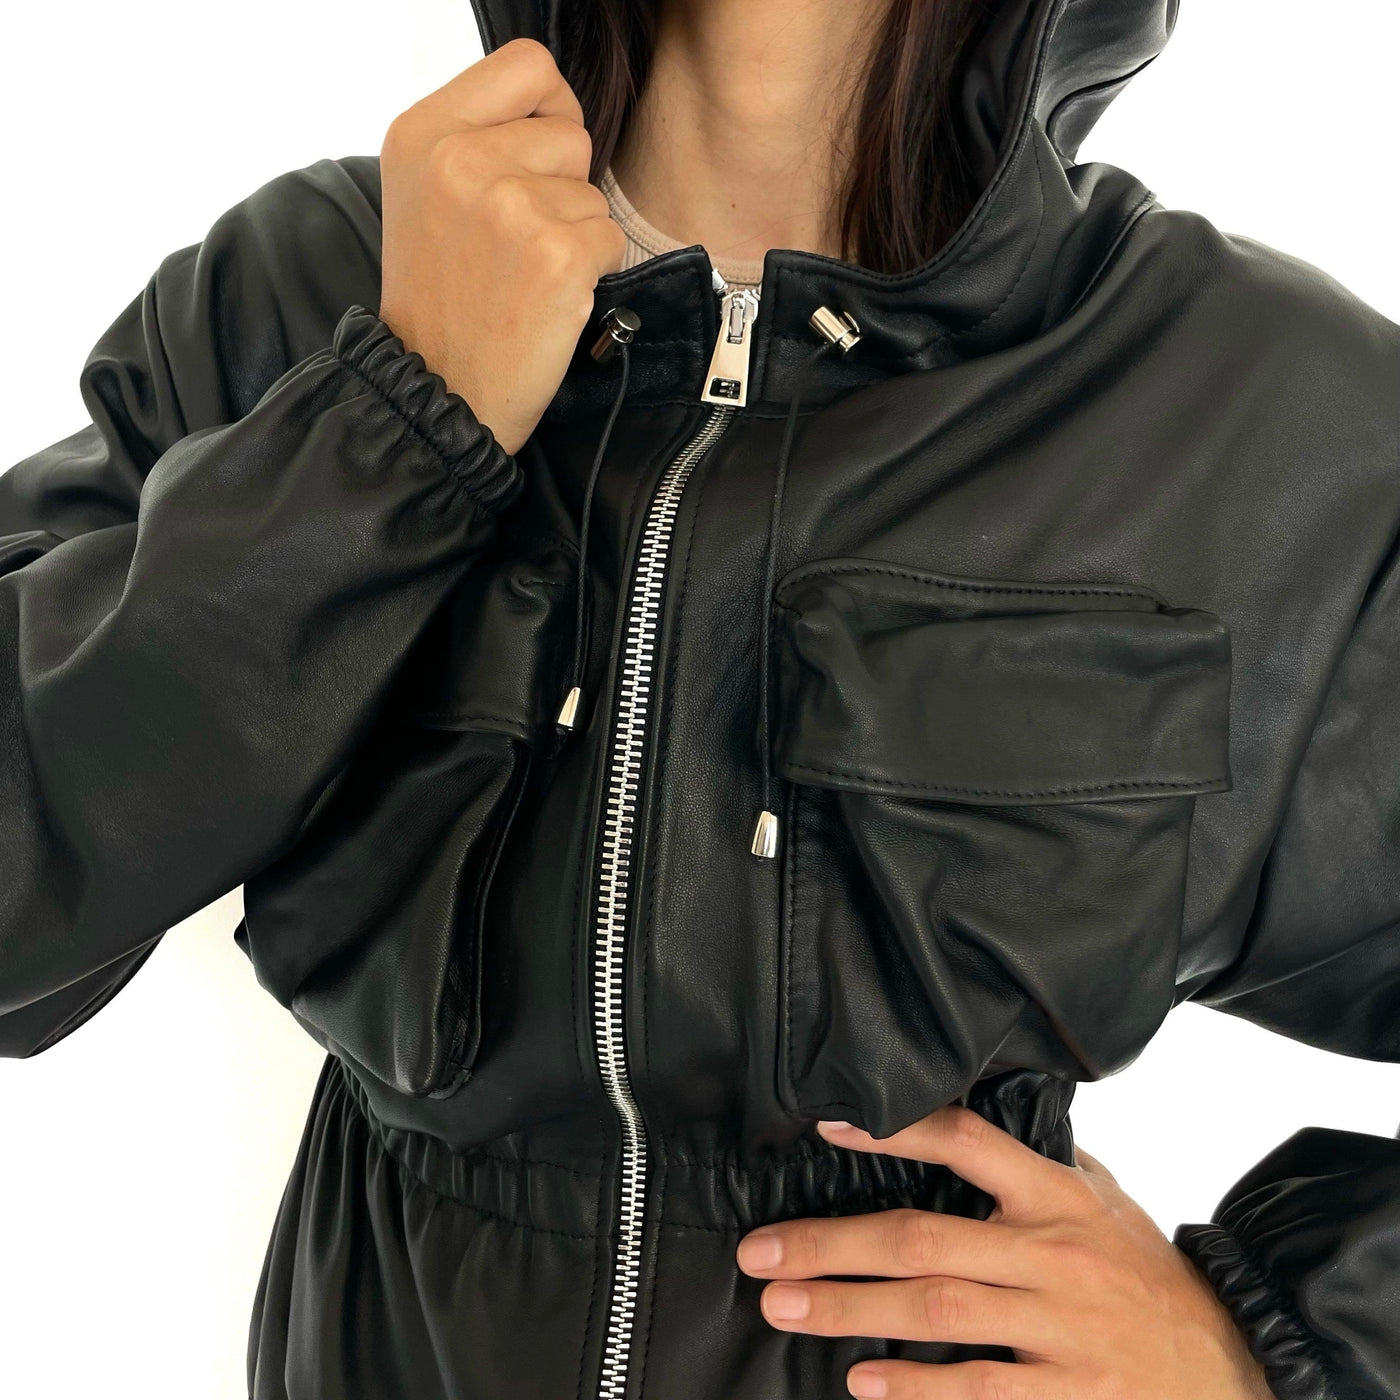 KELLY, the vintage leather jacket with hood - EVA ROJE